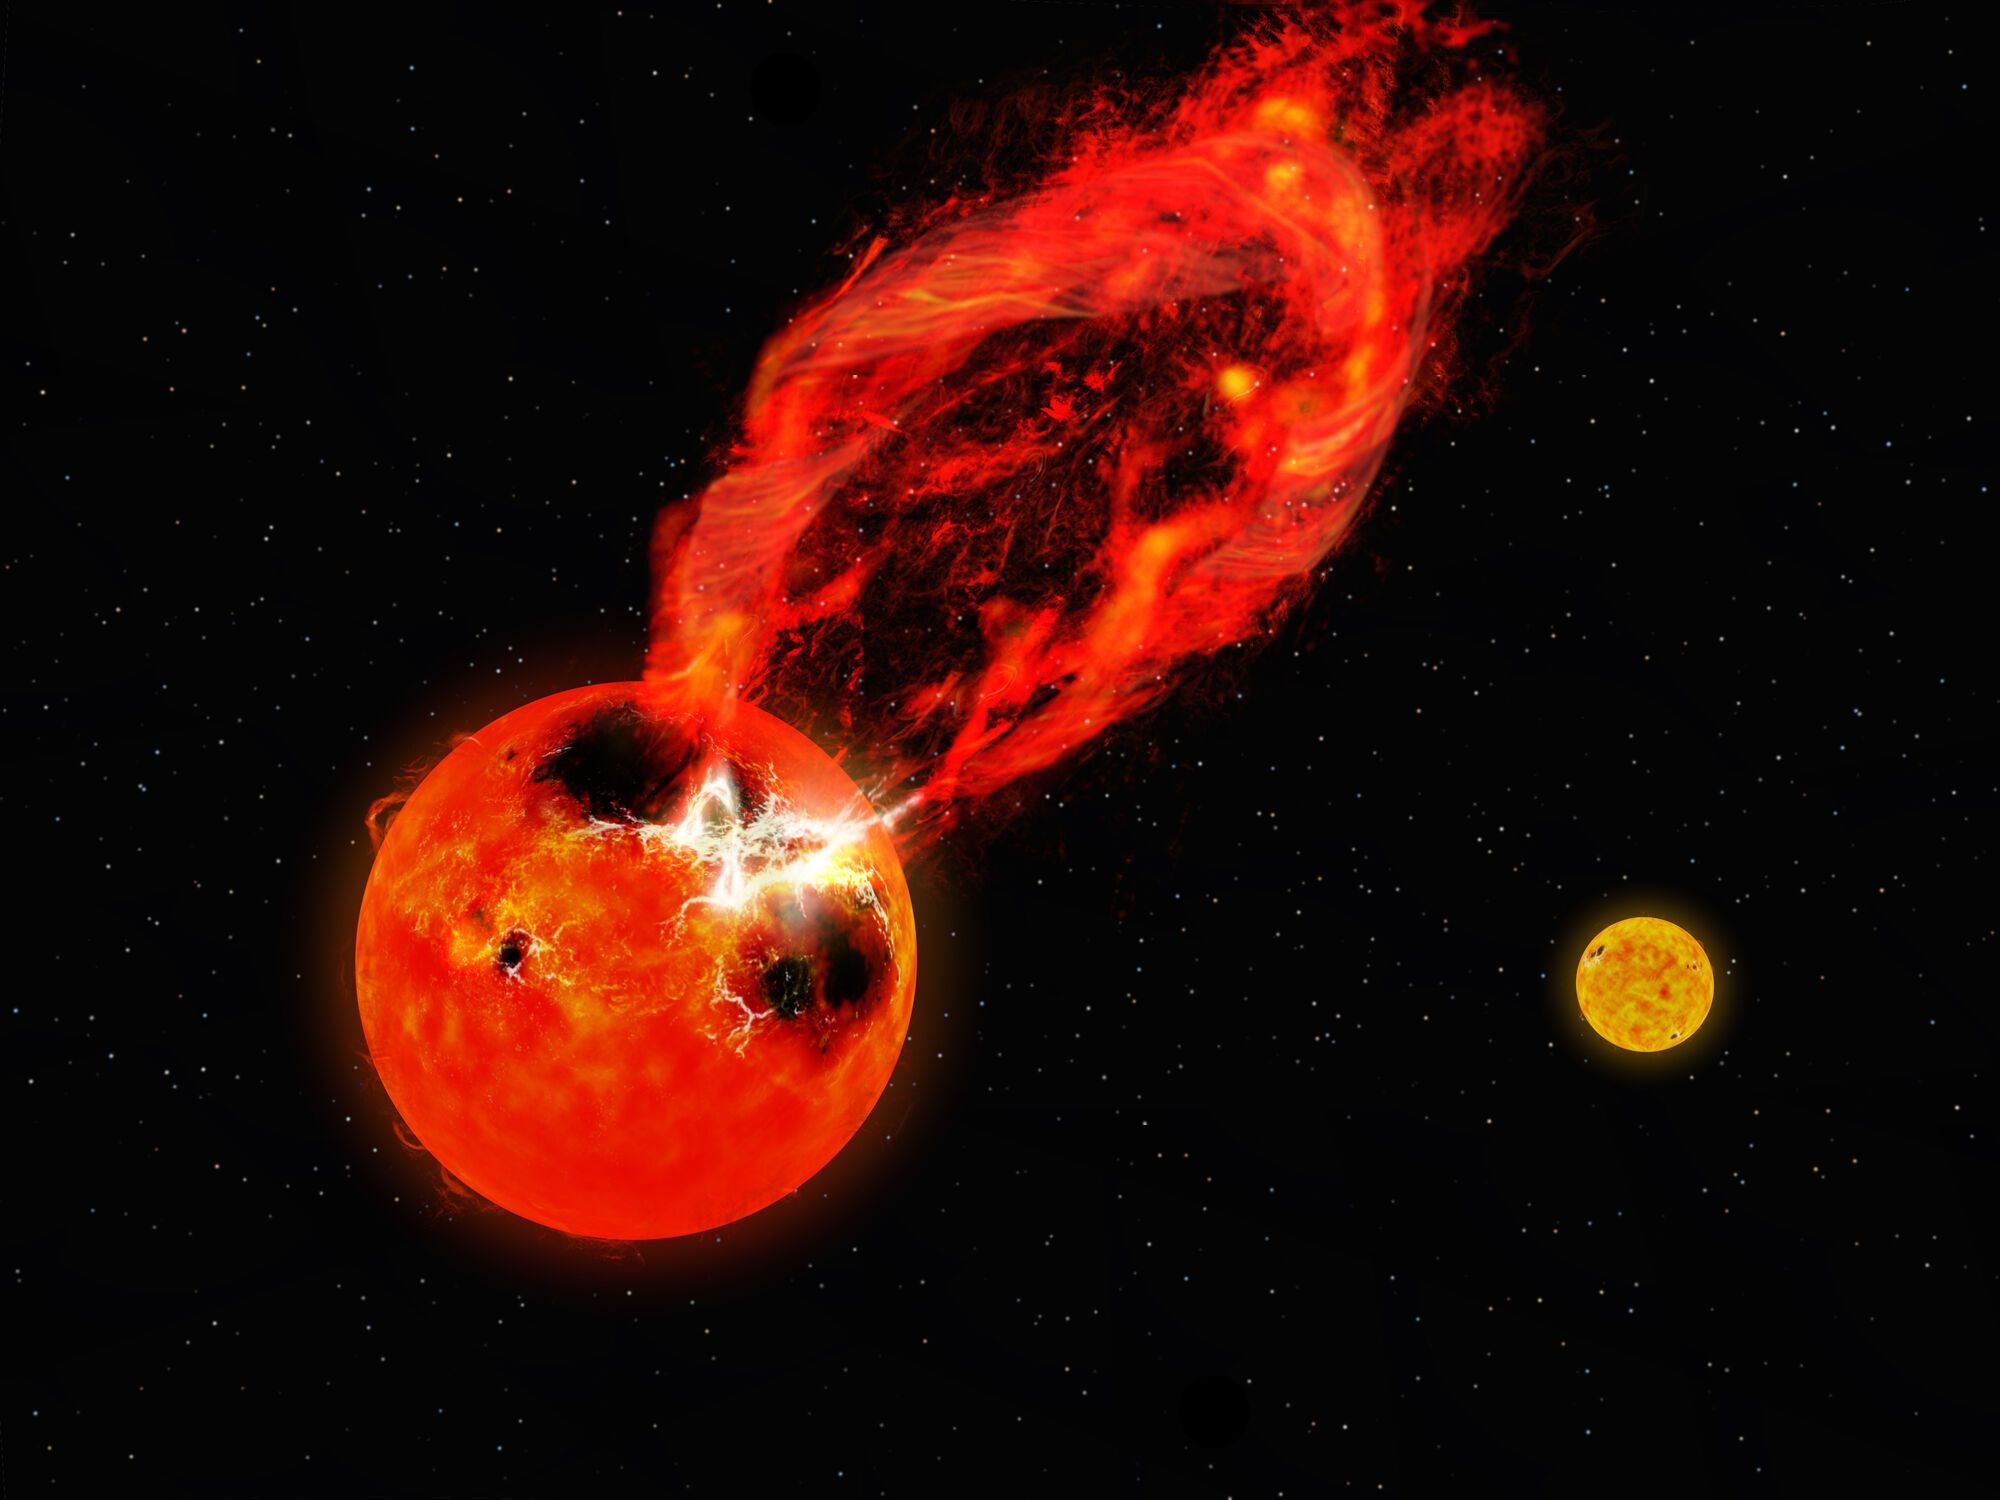 Superburst on a star in the V1355 Orionis system